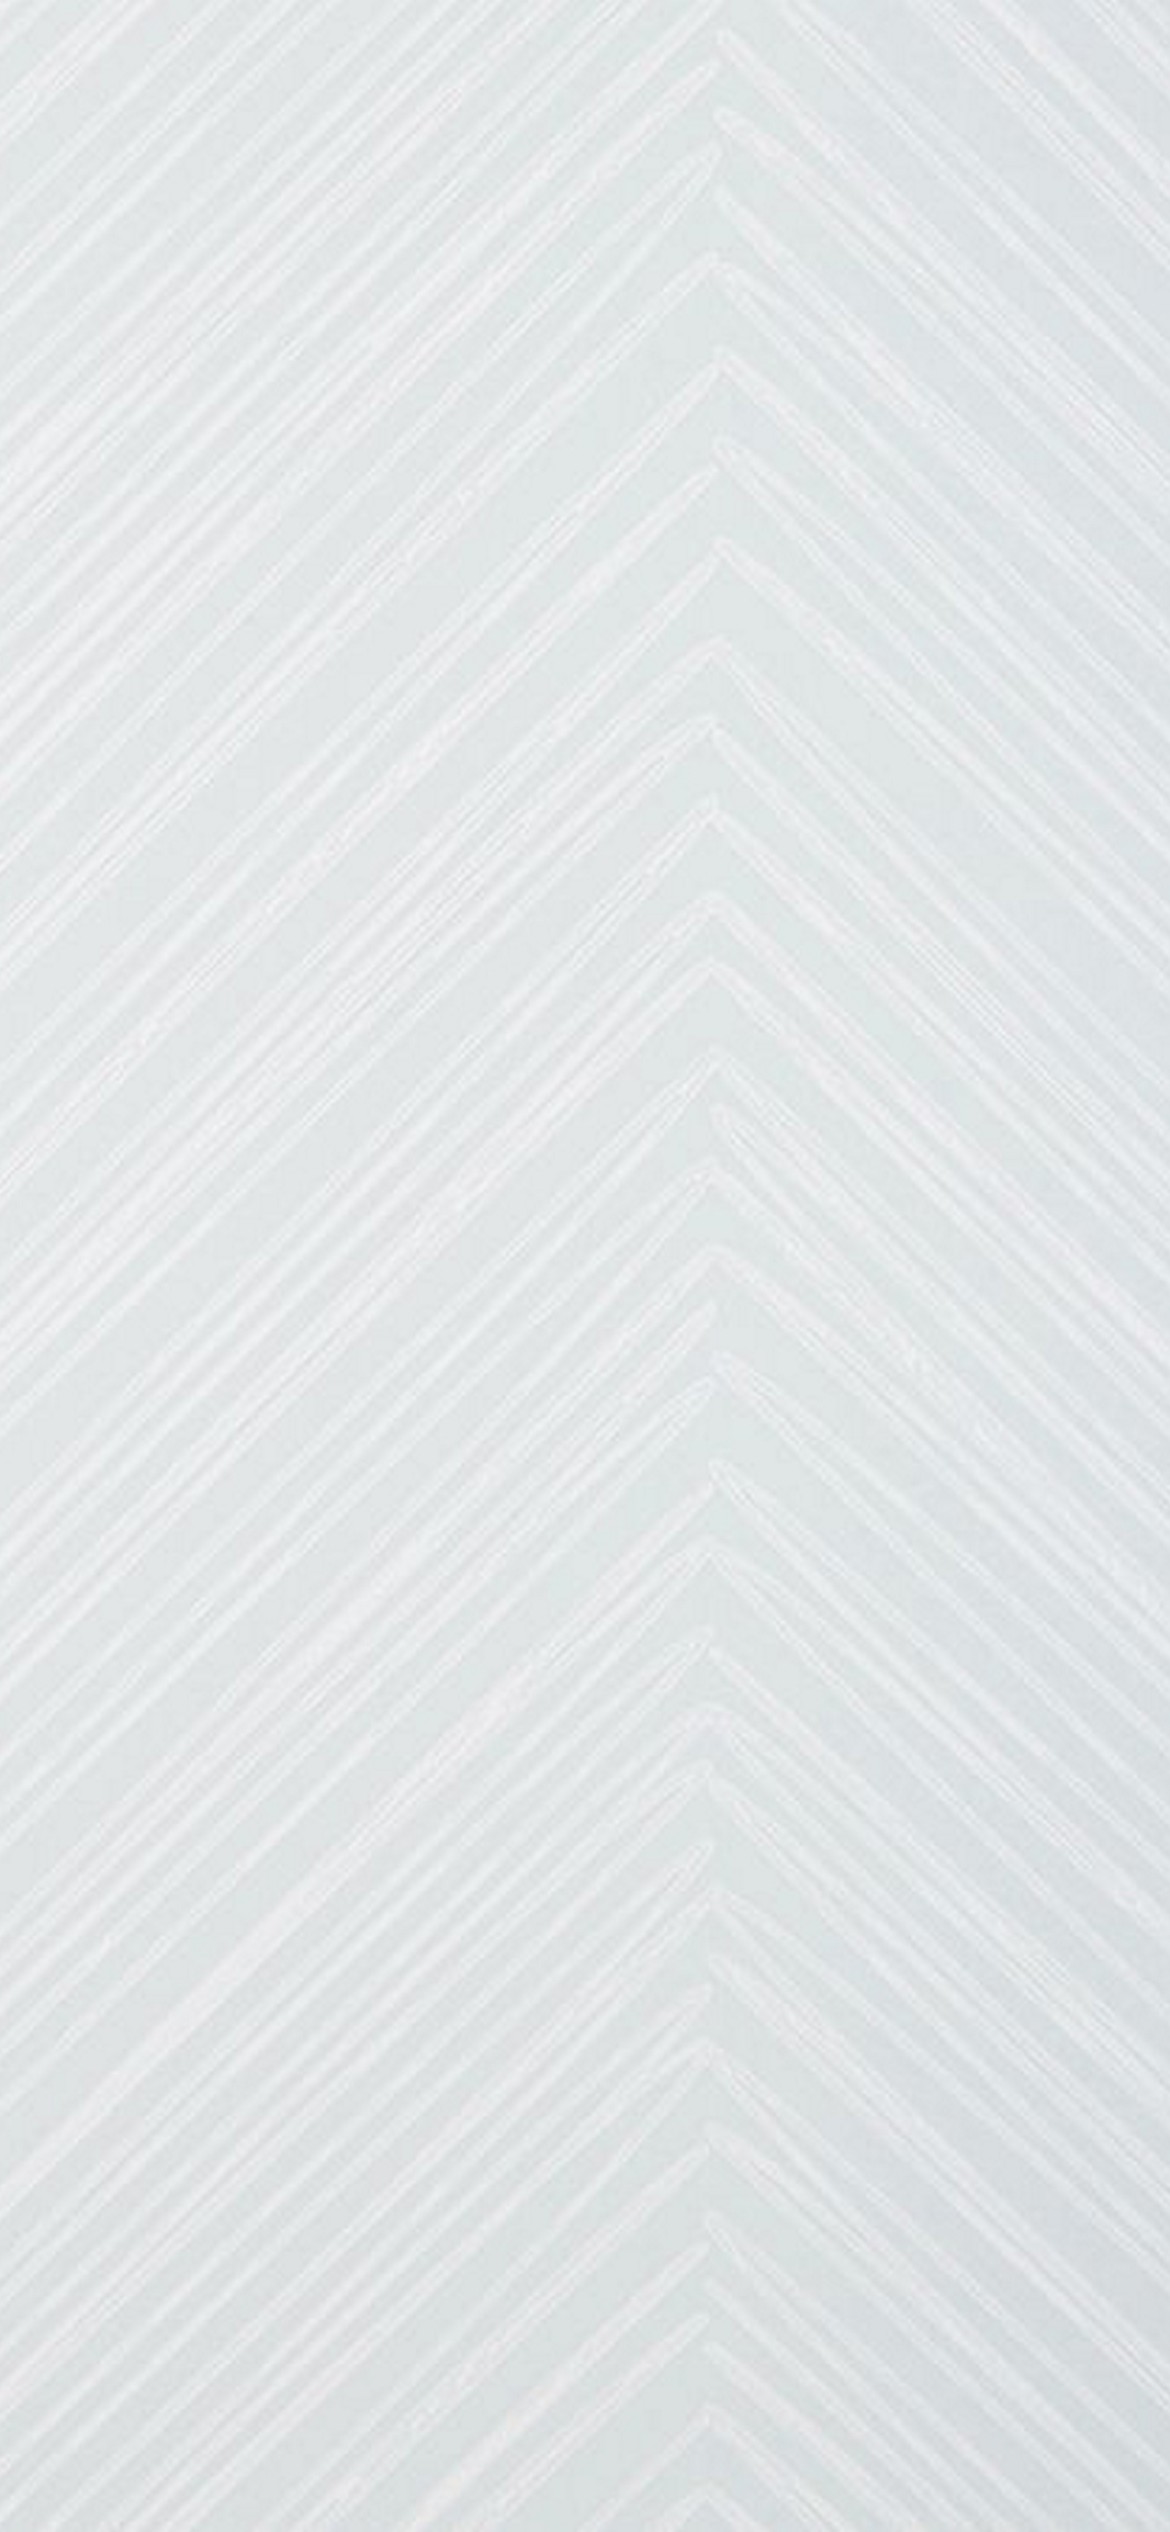 iPhone White Wallpaper - 105